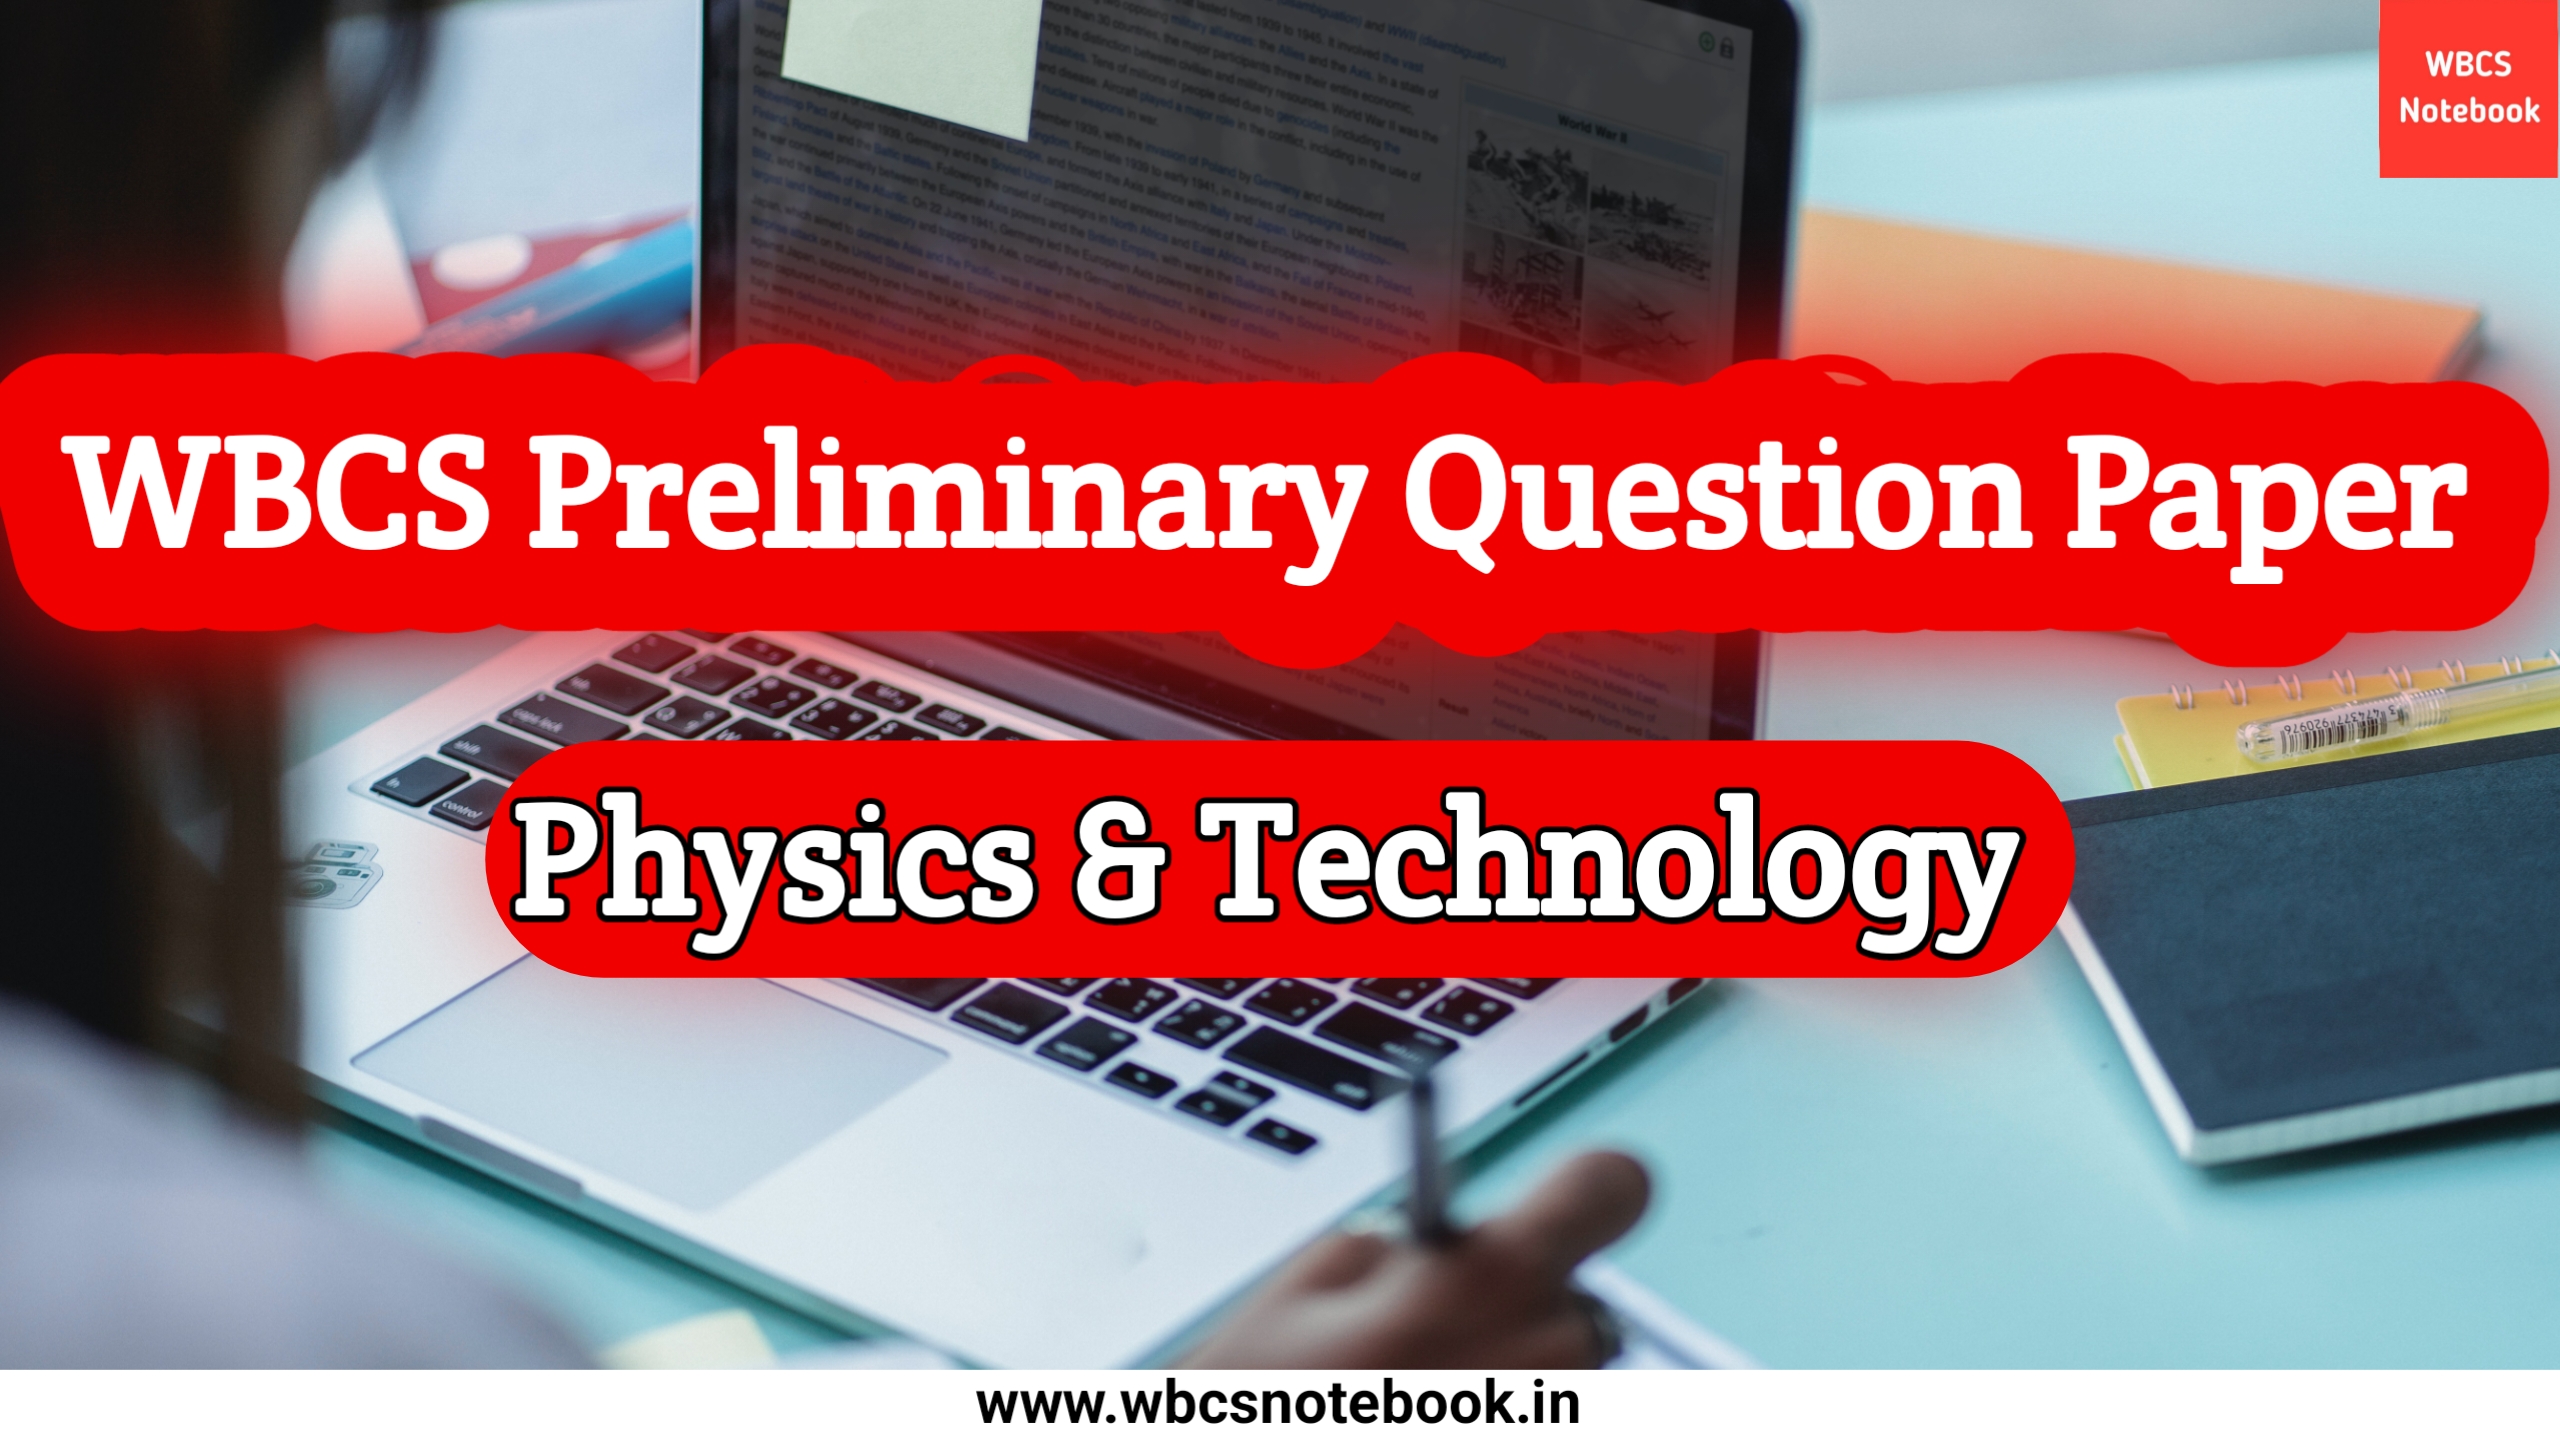 Physics & Technology - WBCS Preliminary Question Paper